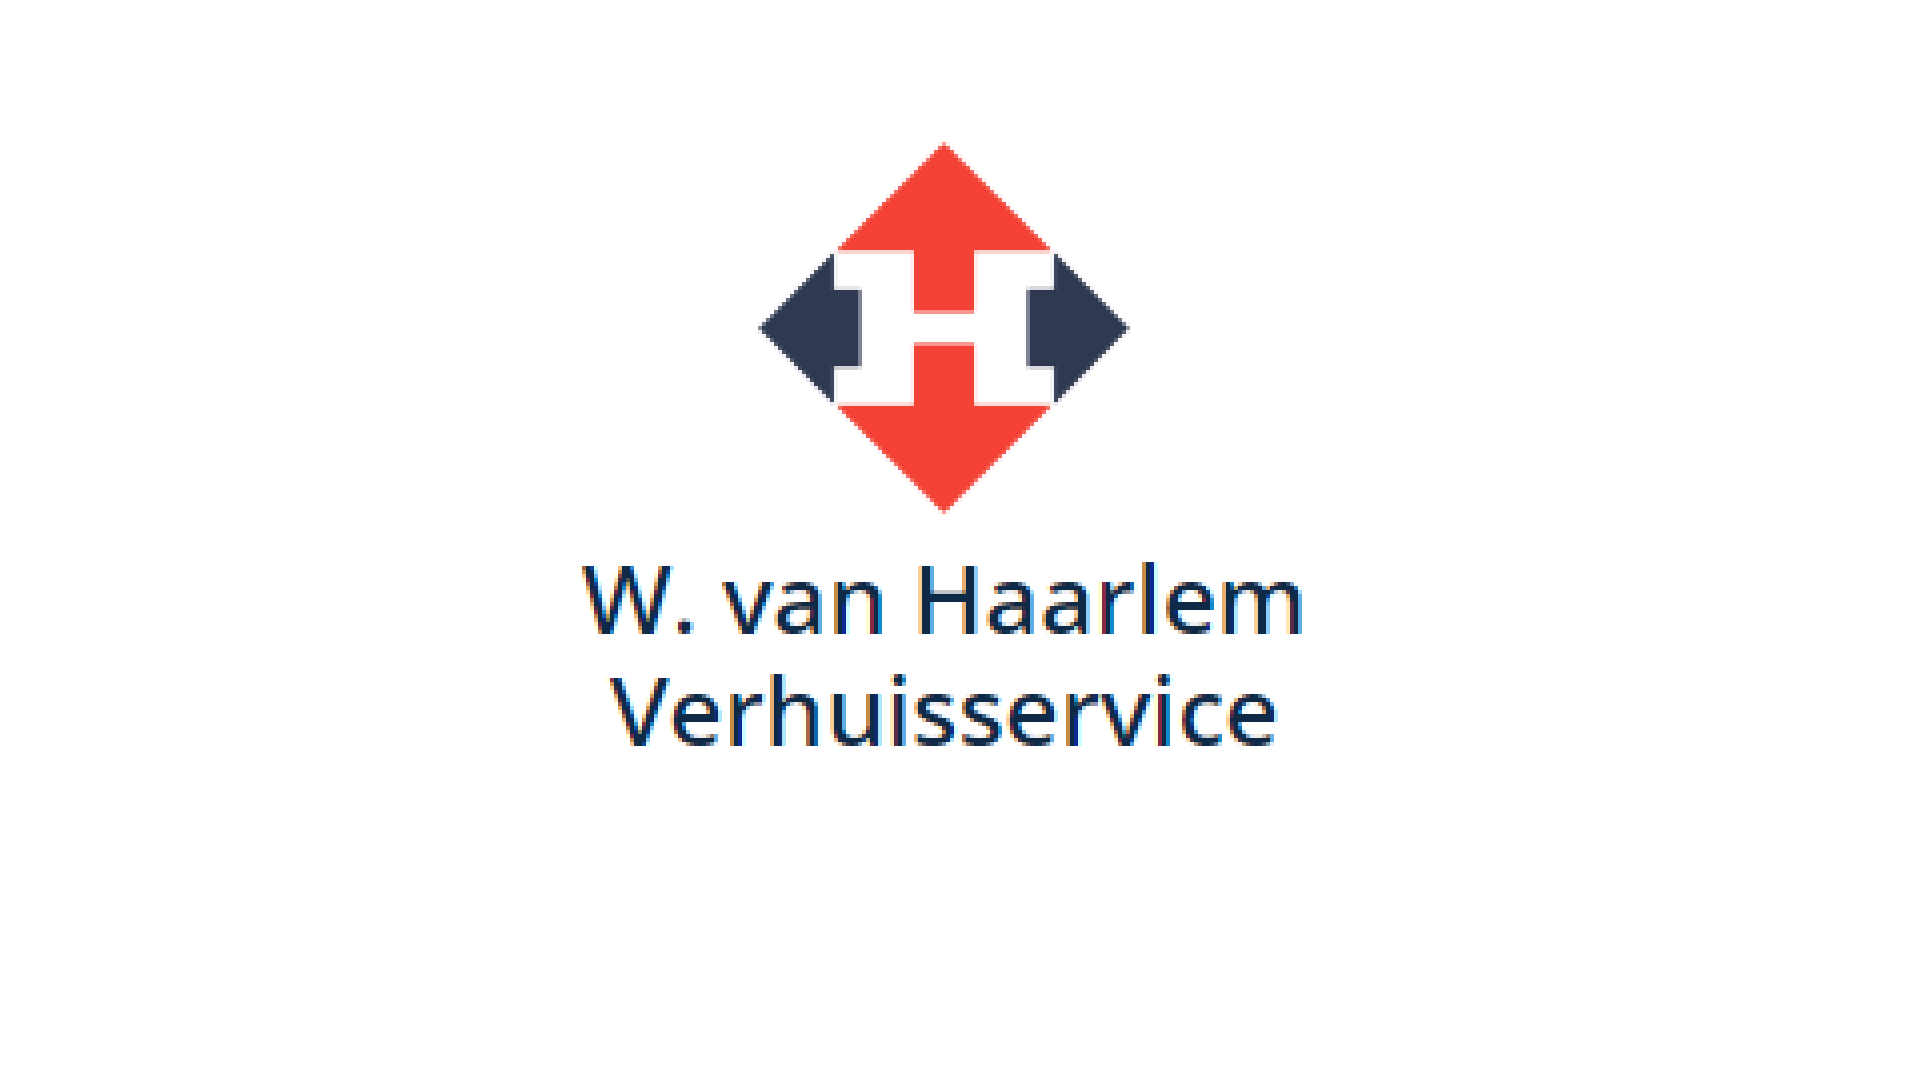 W. van Haarlem Internationaal Verhuis- en Transportbedrijf B.V.